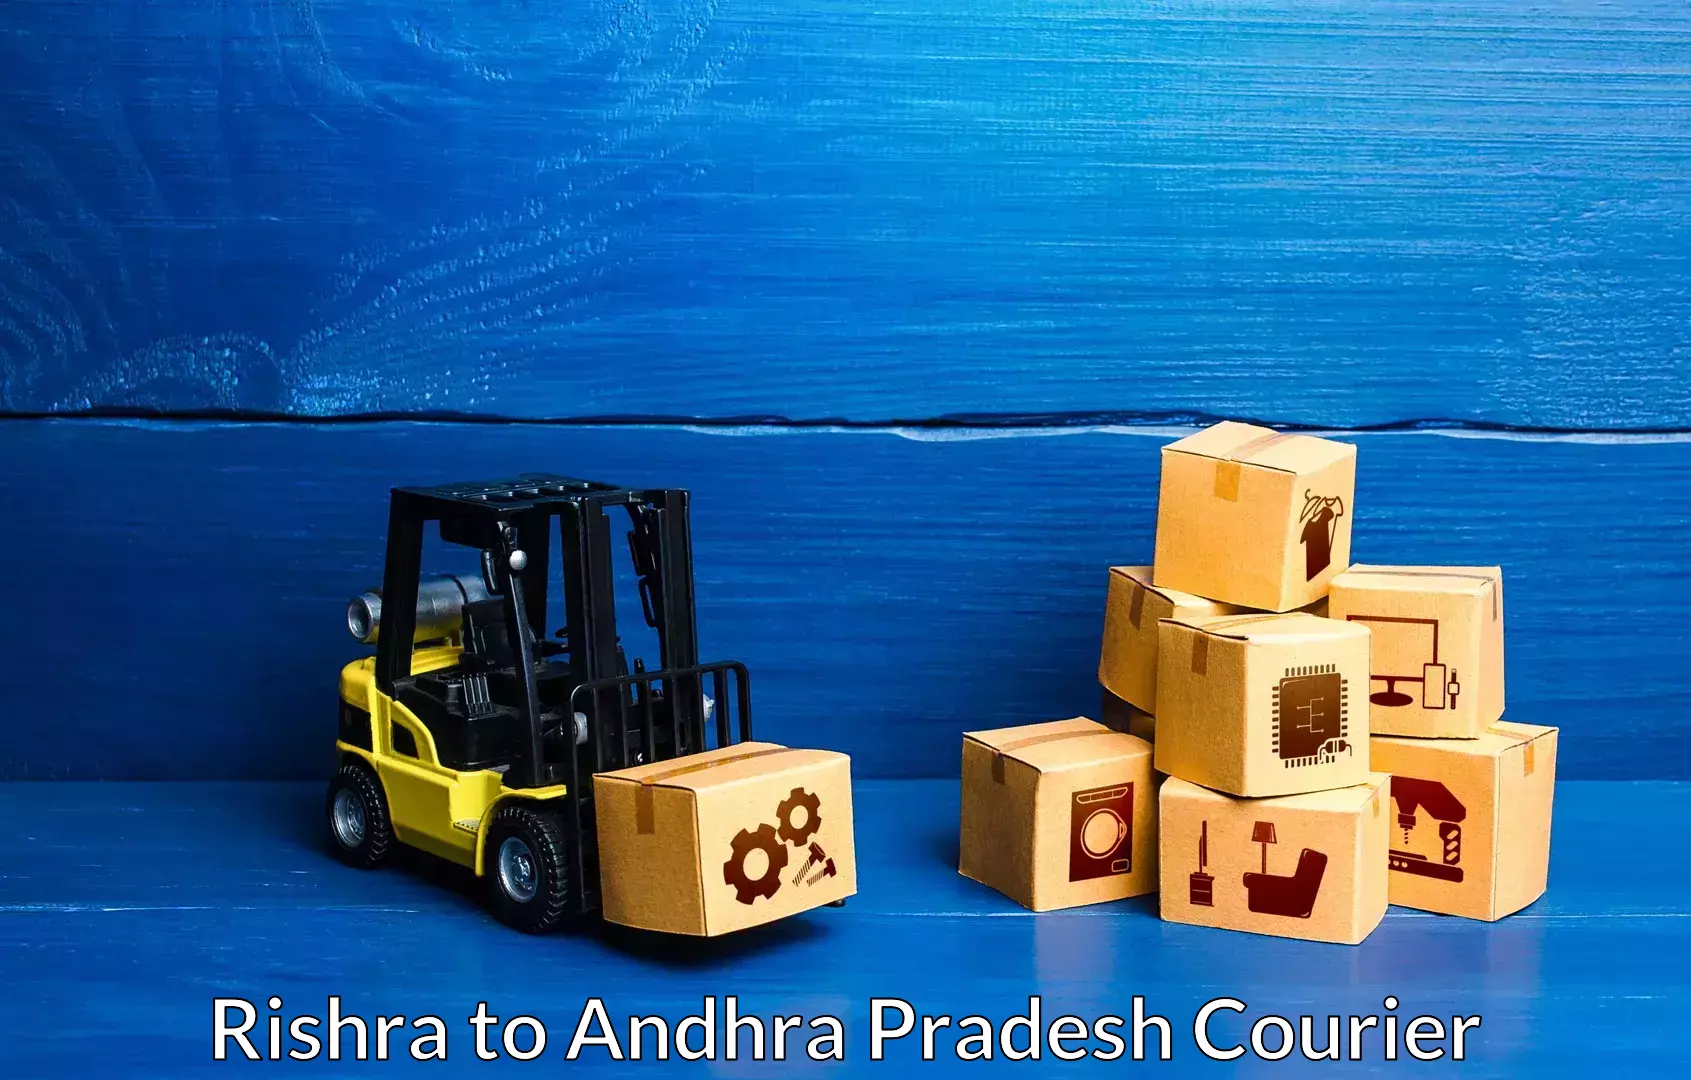 Furniture delivery service Rishra to Dhone